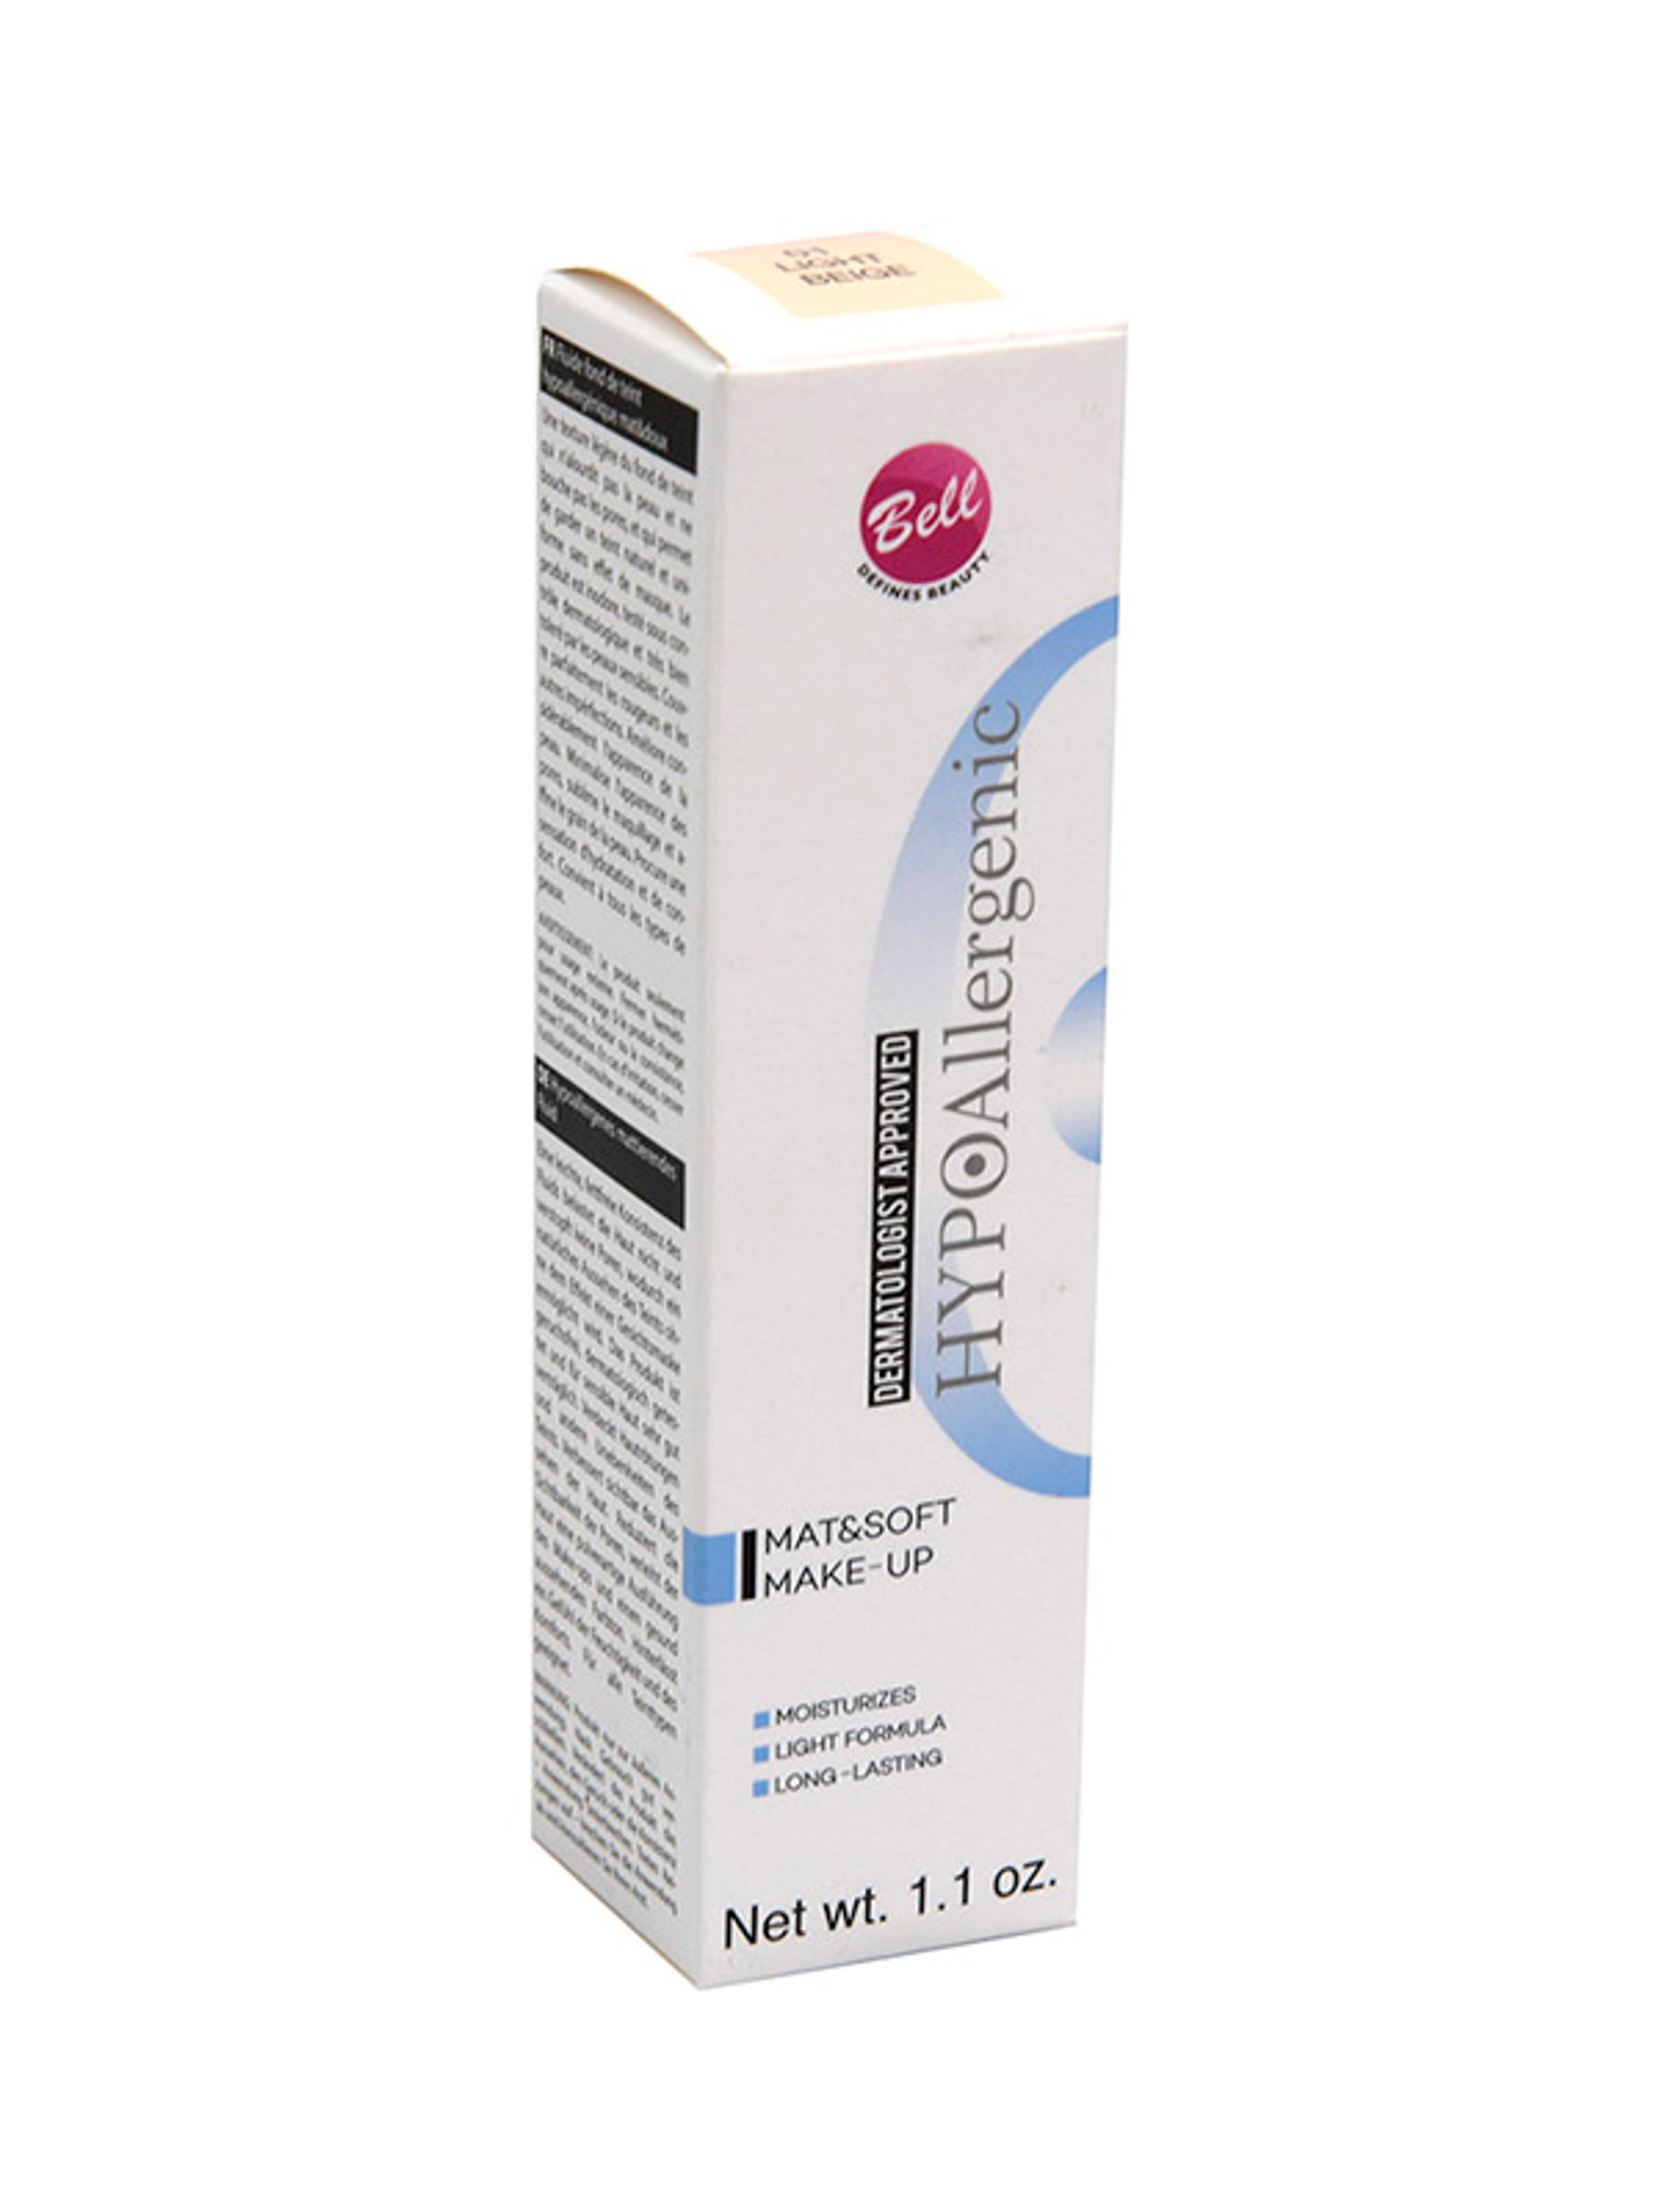 Hypoallergenic alapozo mat&soft 01 - 1 db